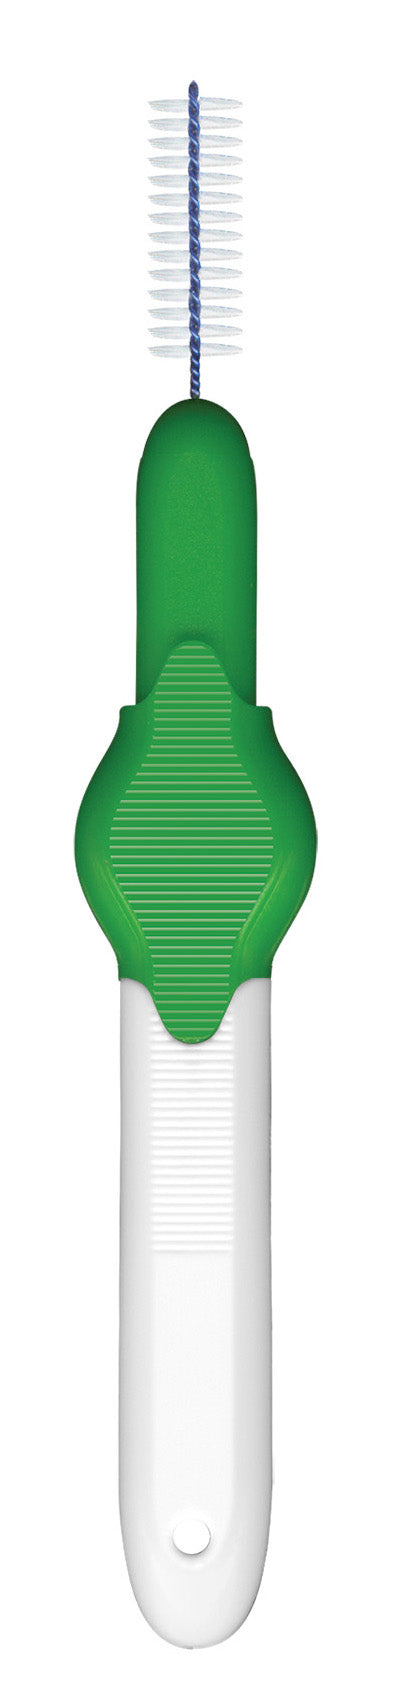 OPTIM Interdentalbürste 8er grün - ISO Größe 5